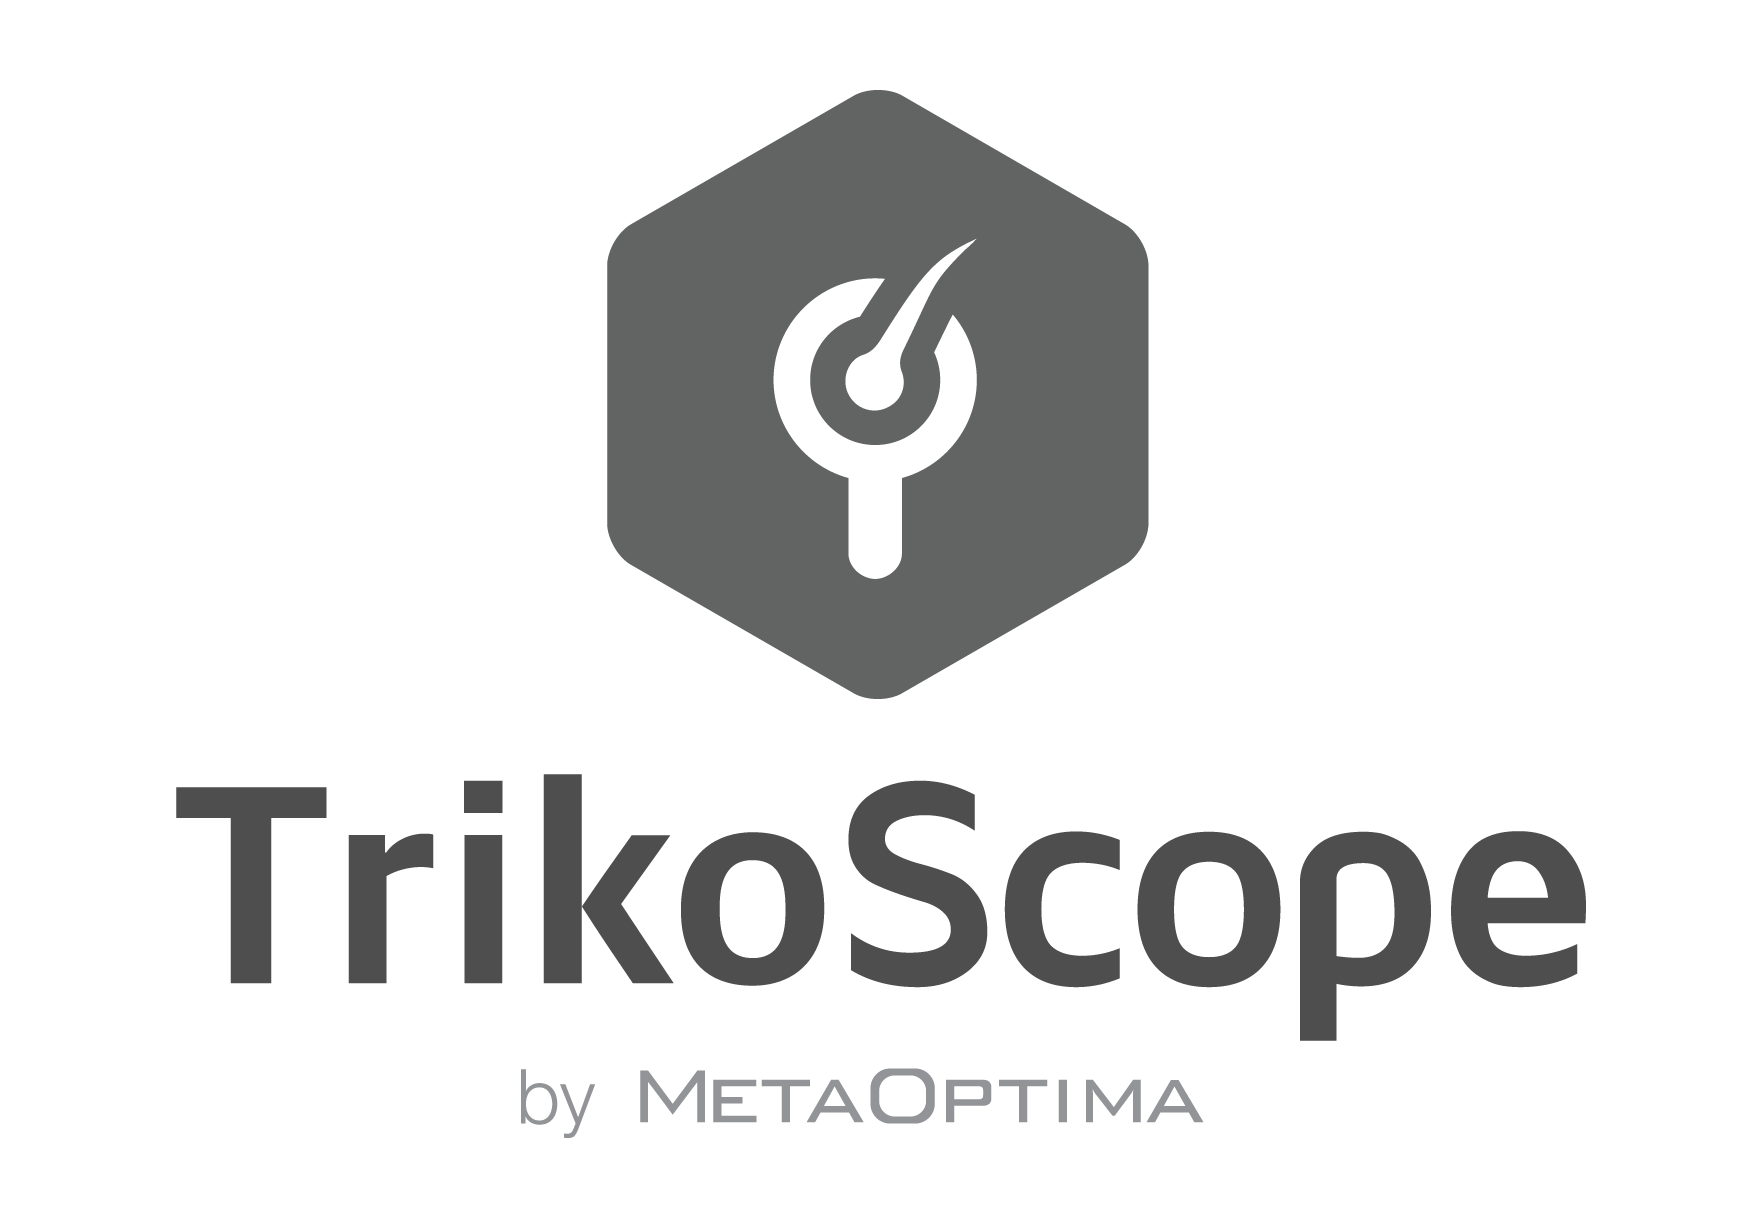 TrikoScope logo